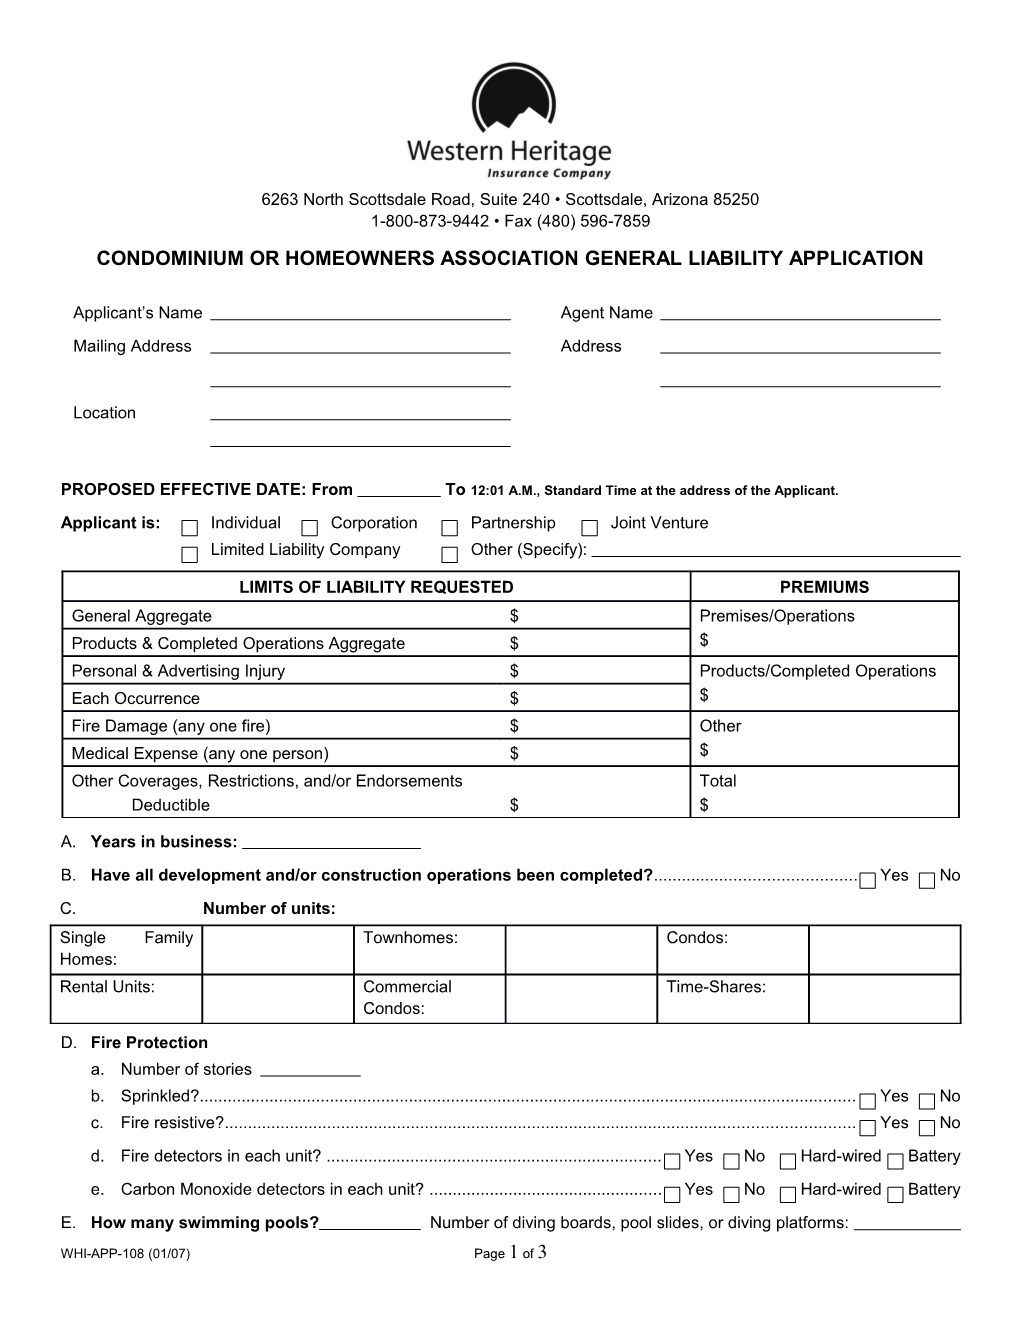 Condominium Or Homeowners Association General Liability Application